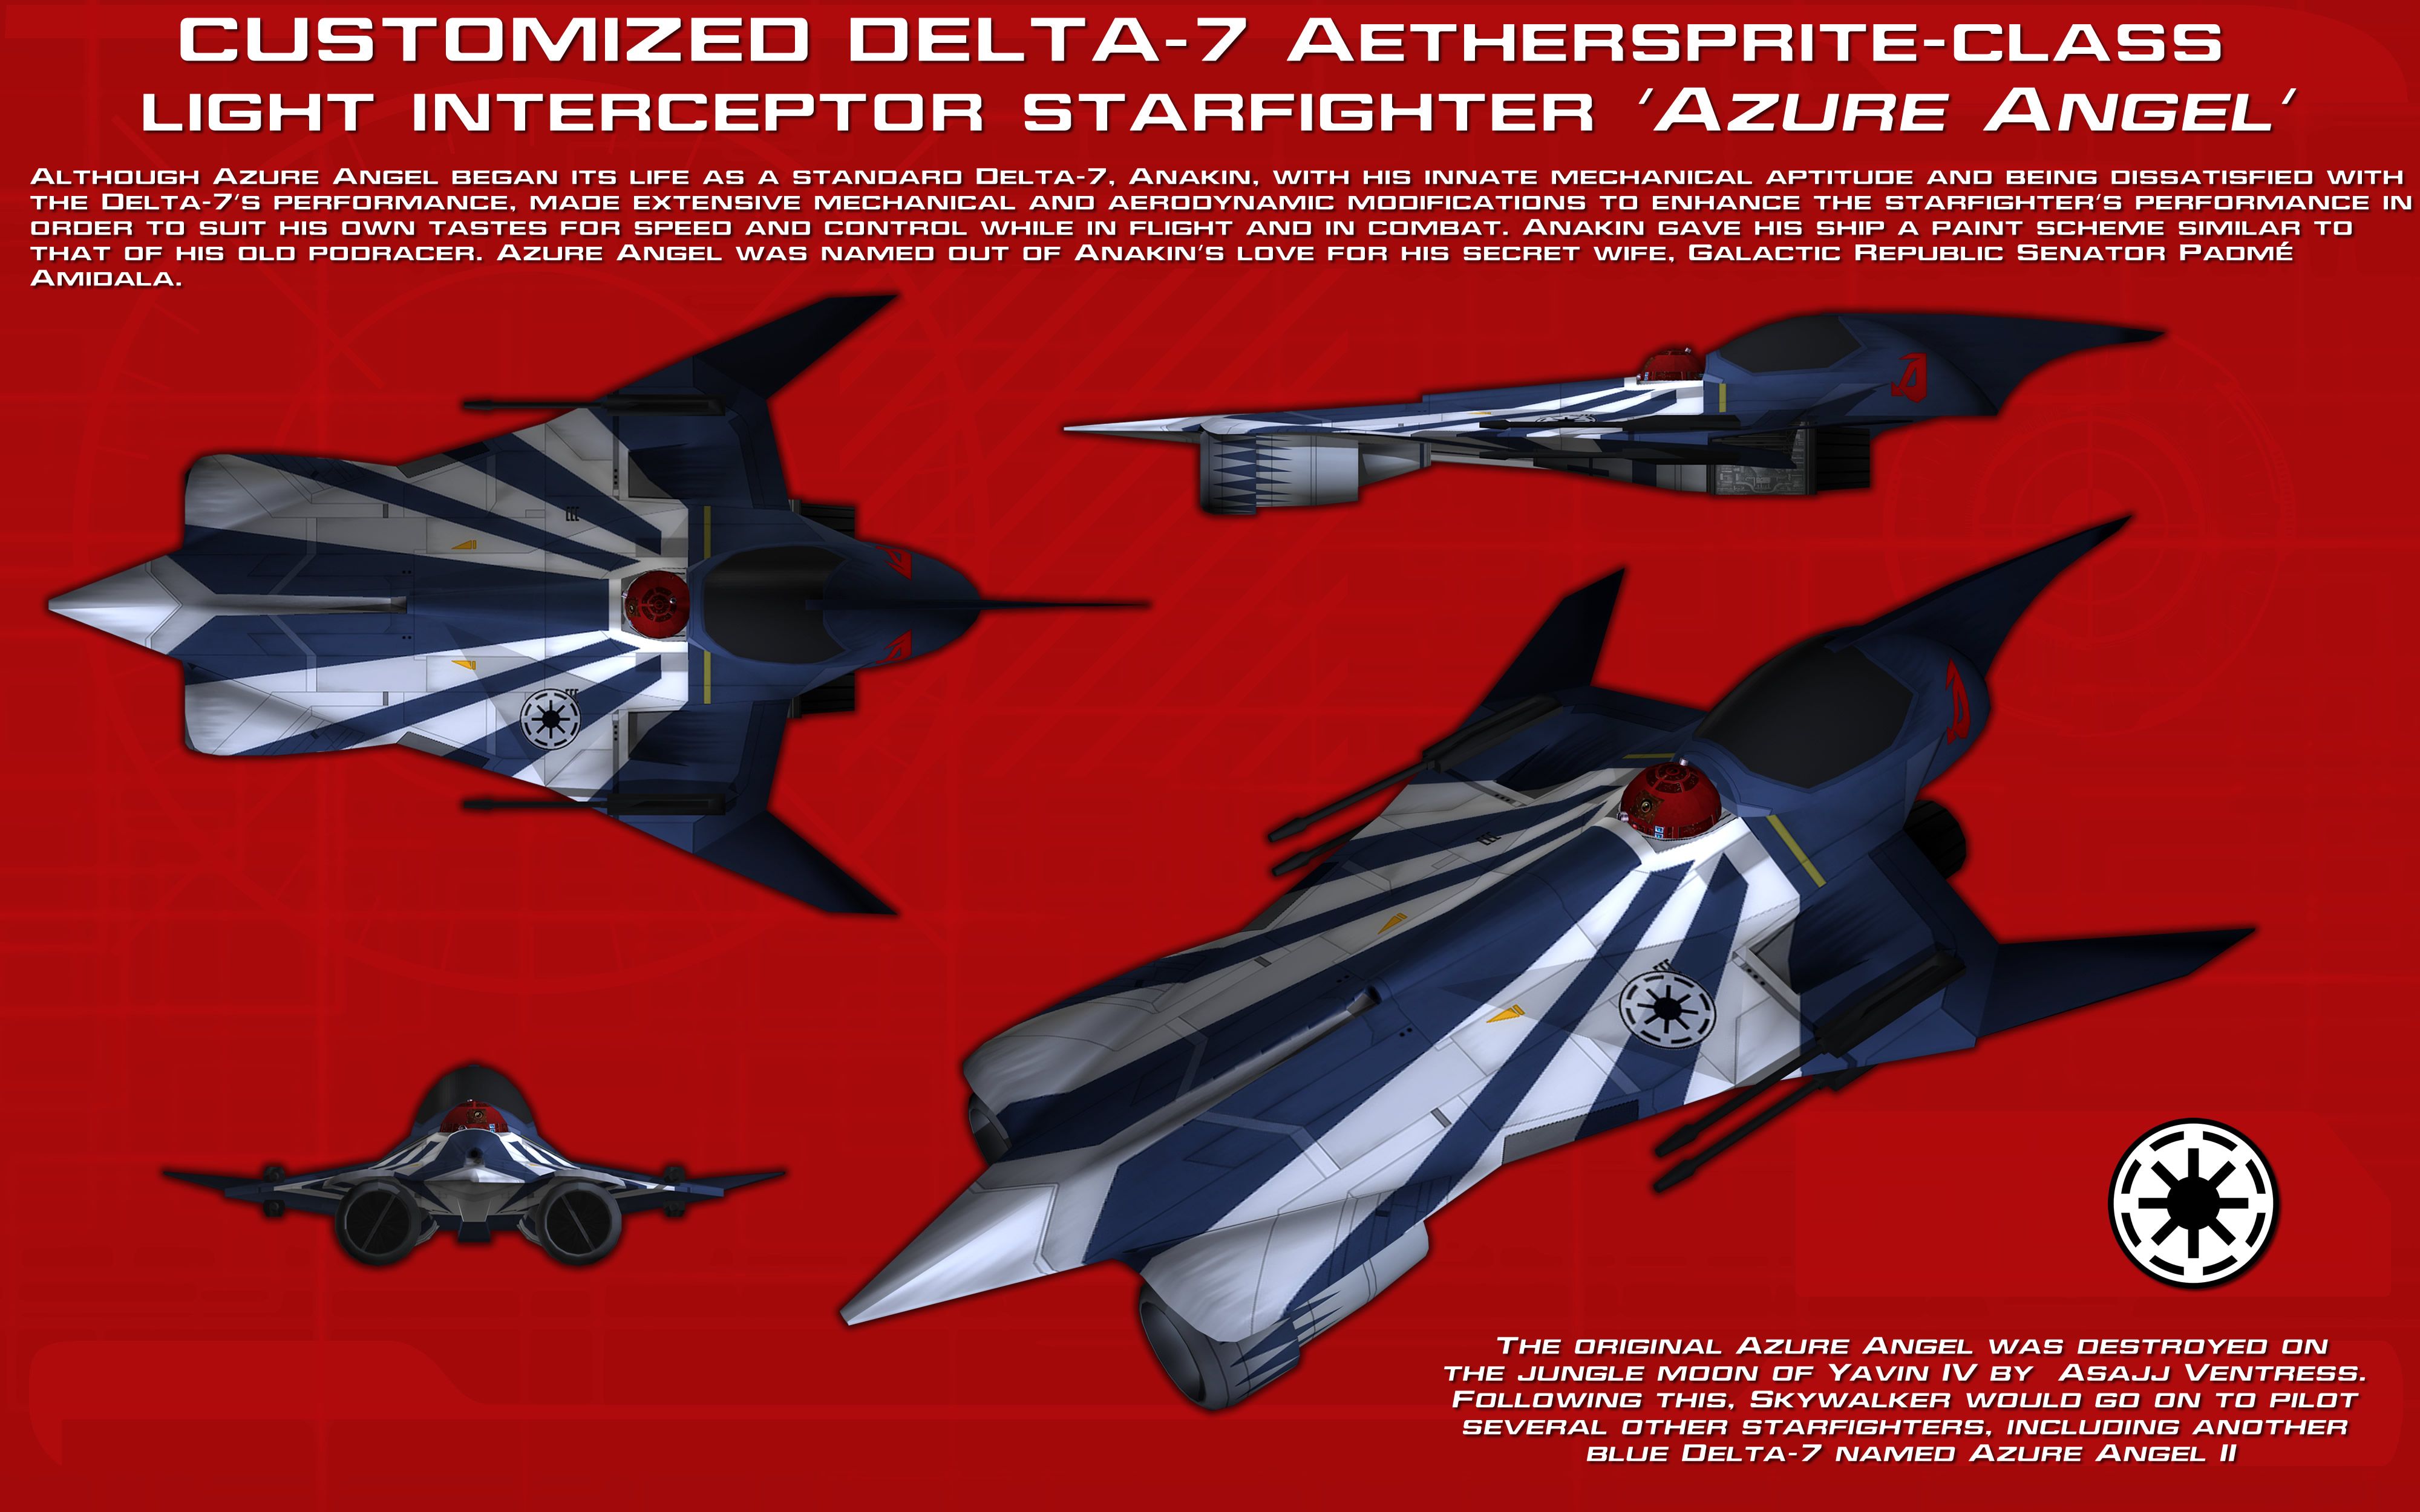 Delta 7 Aethersprite Azure Angel Ortho [New]. Star Wars Spaceships, Star Wars Artwork, Star Wars Ships